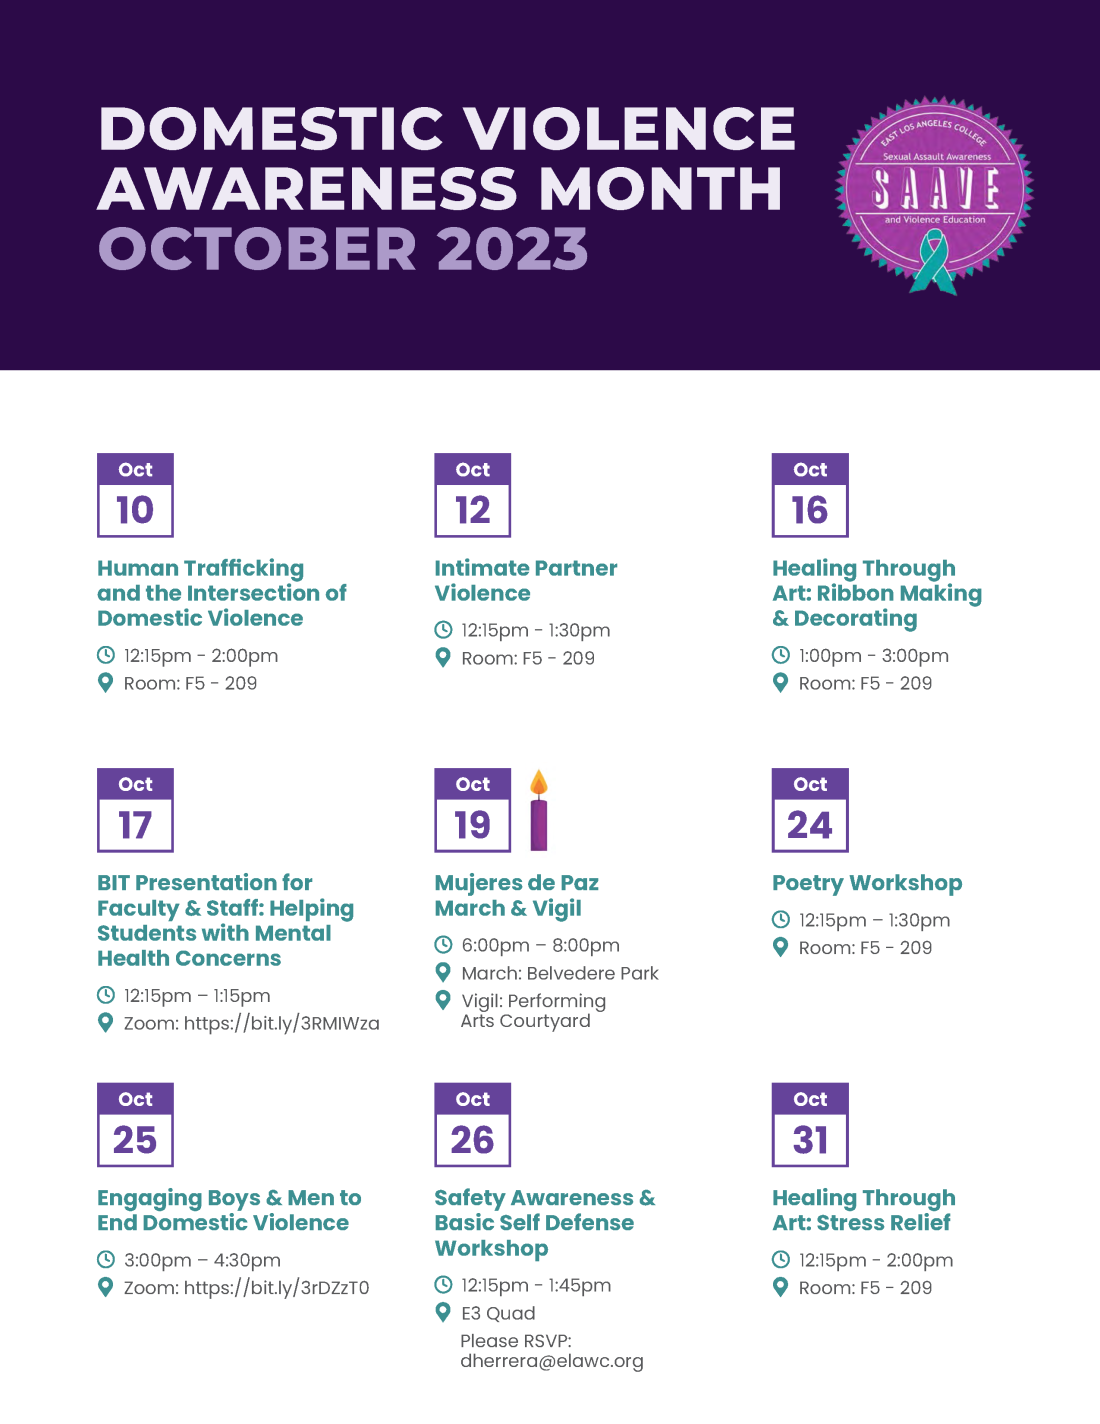 saave_domestic_violence_awareness_month_calendar_october_2023